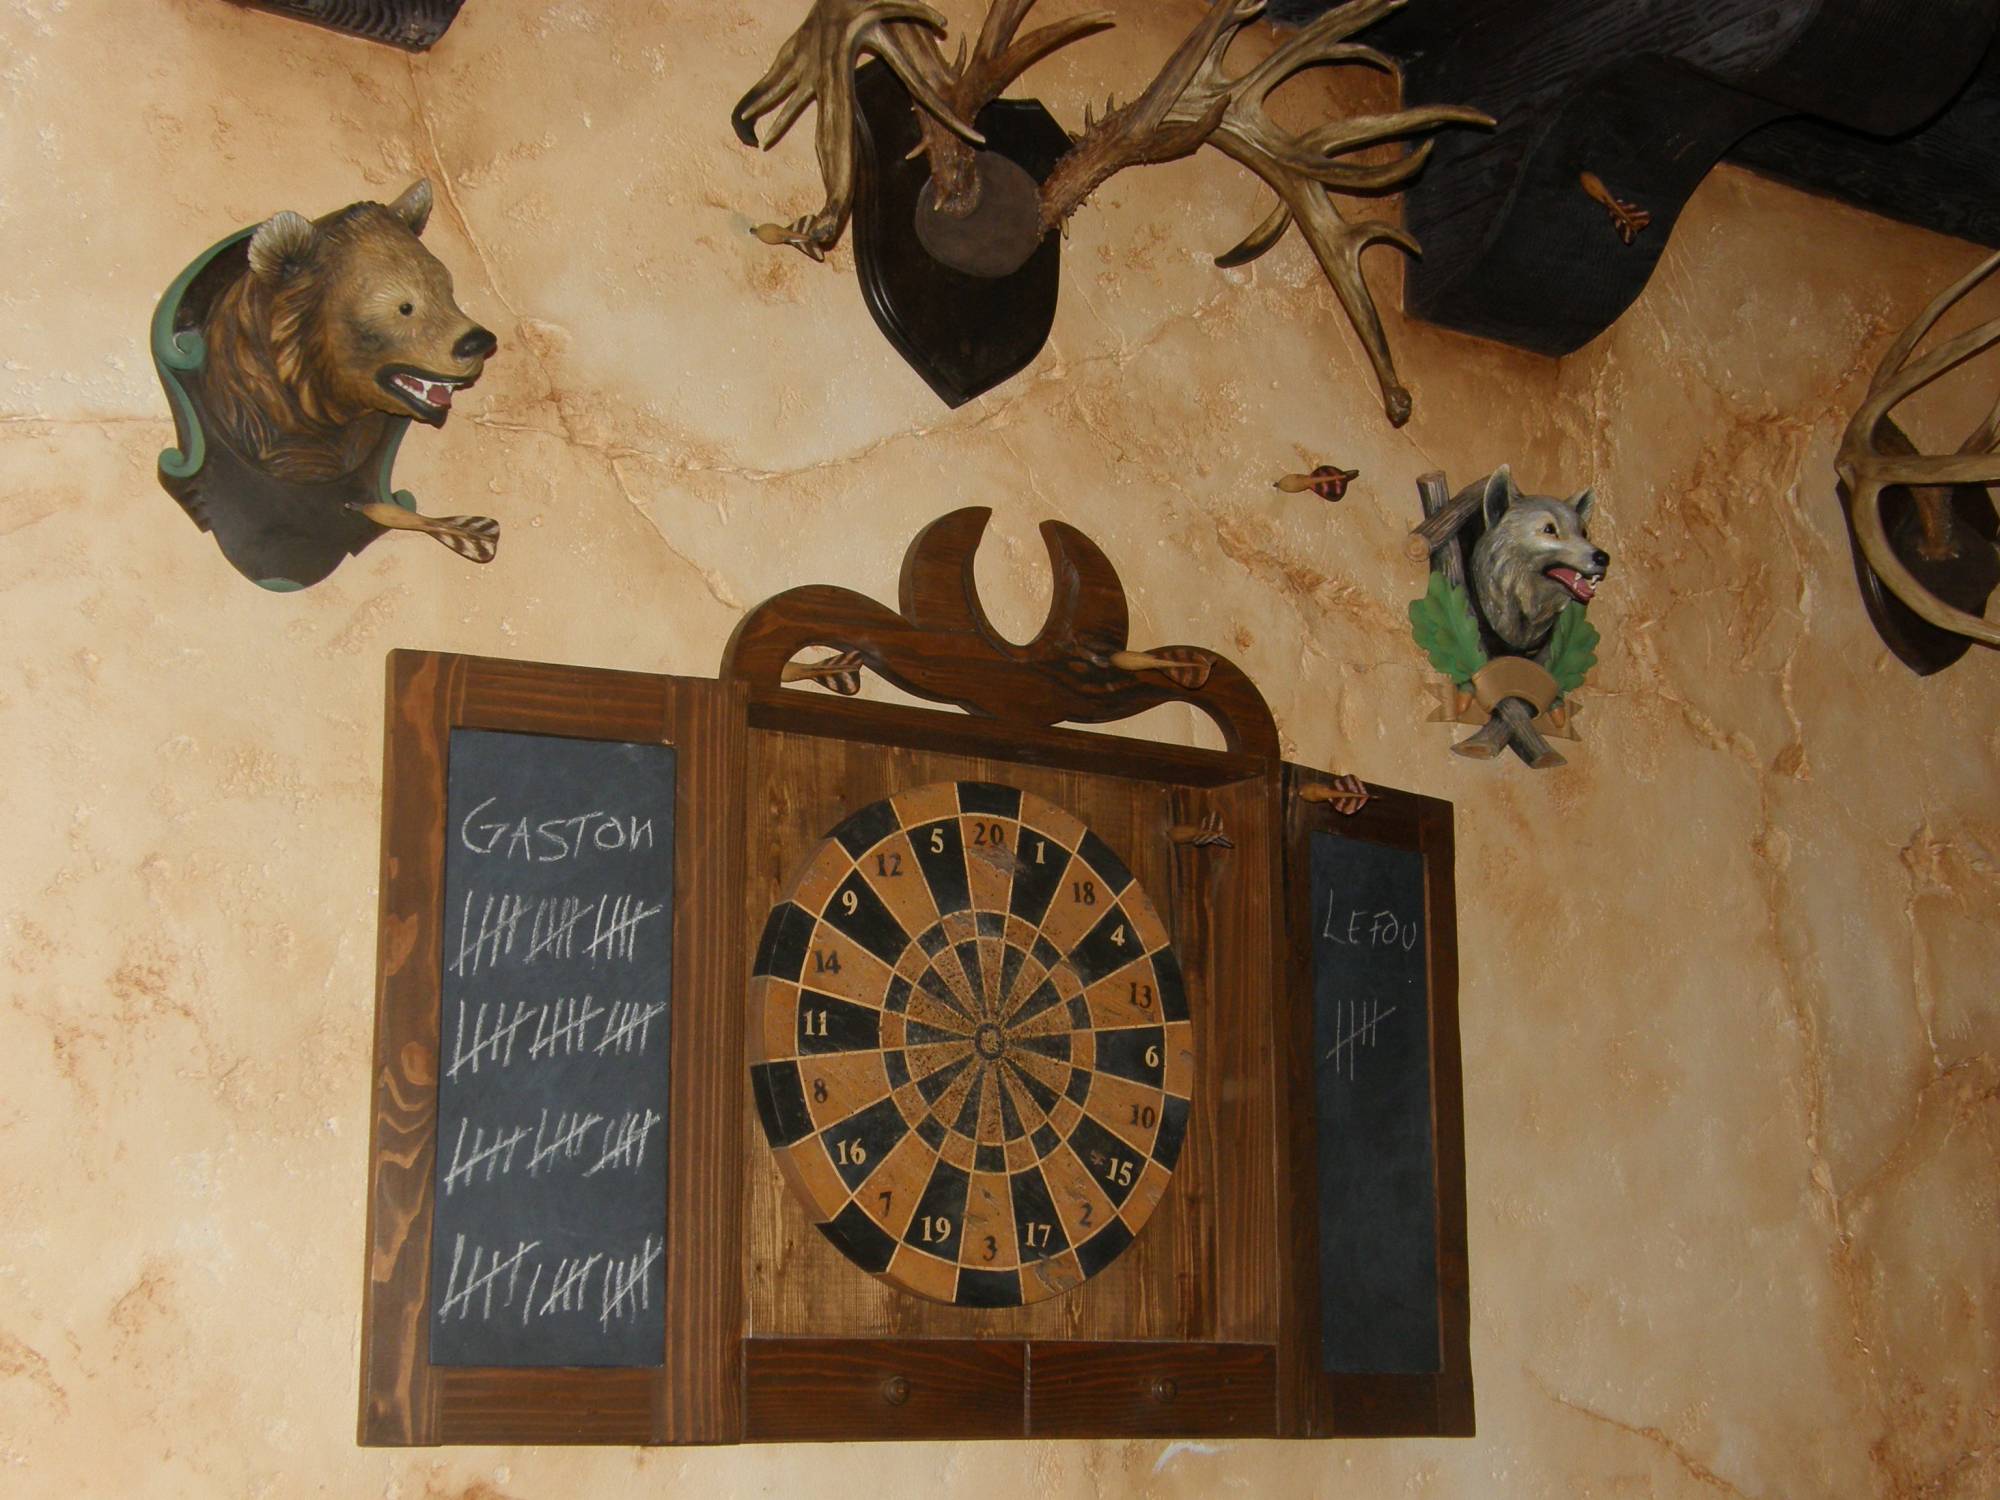 Inside Gaston's Tavern